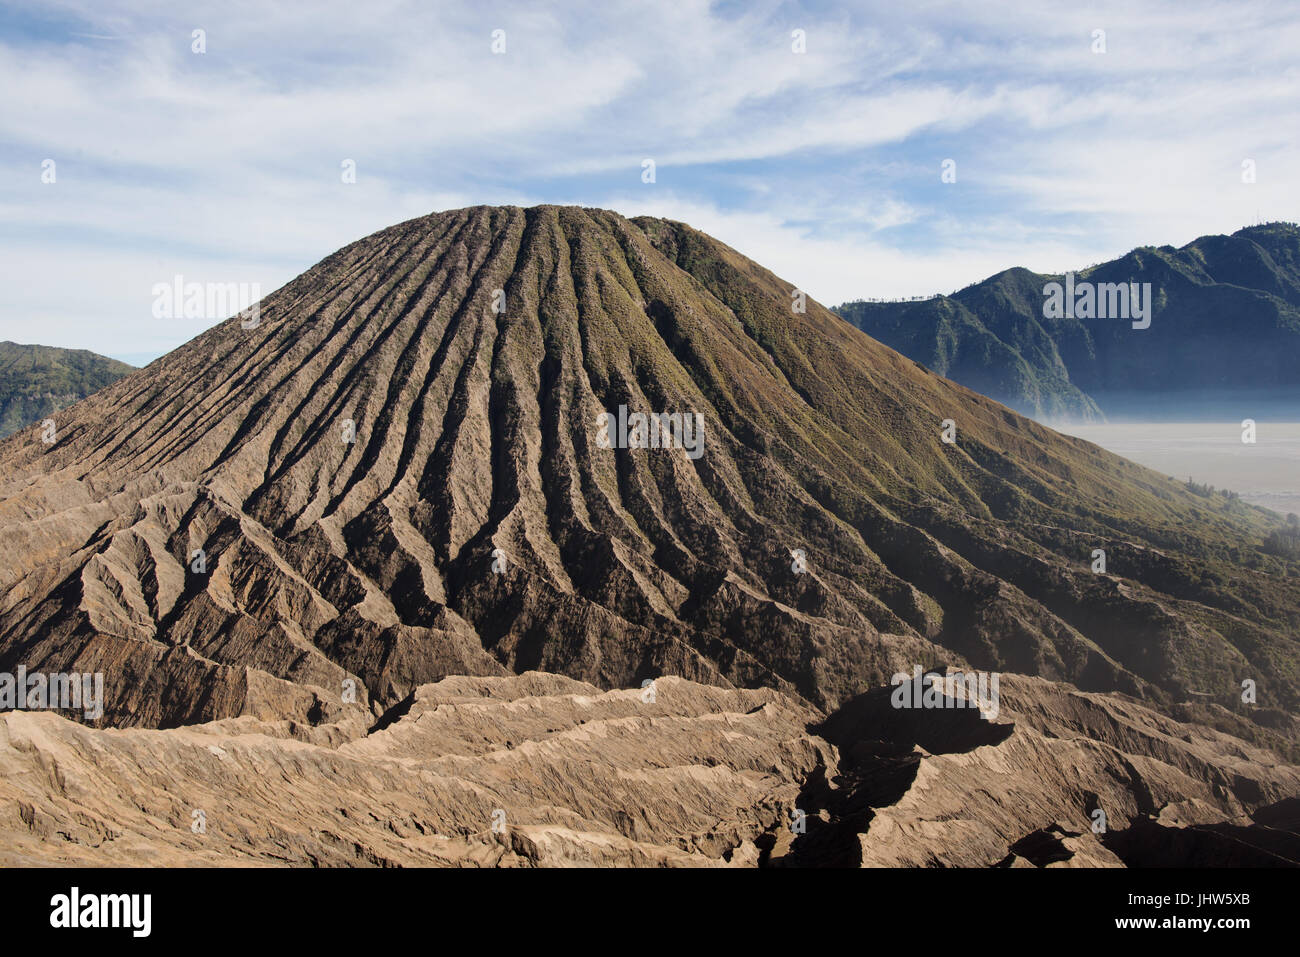 Vulkankegel in der Caldeira des aktiven Vulkans Mount Bromo, Ost-Java Indonesien. Stockfoto